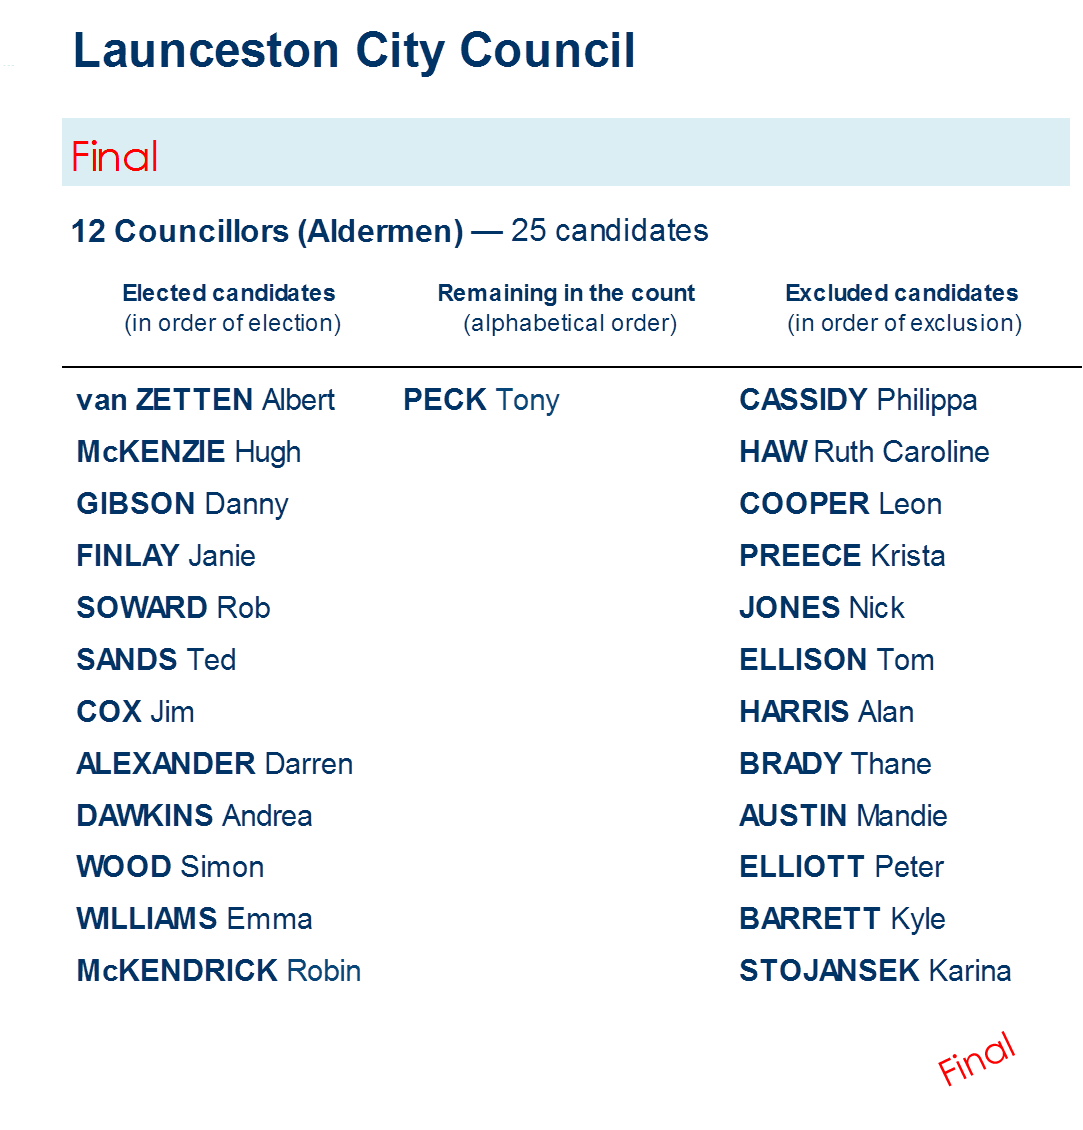 councillors distribution of preferences - Councillors